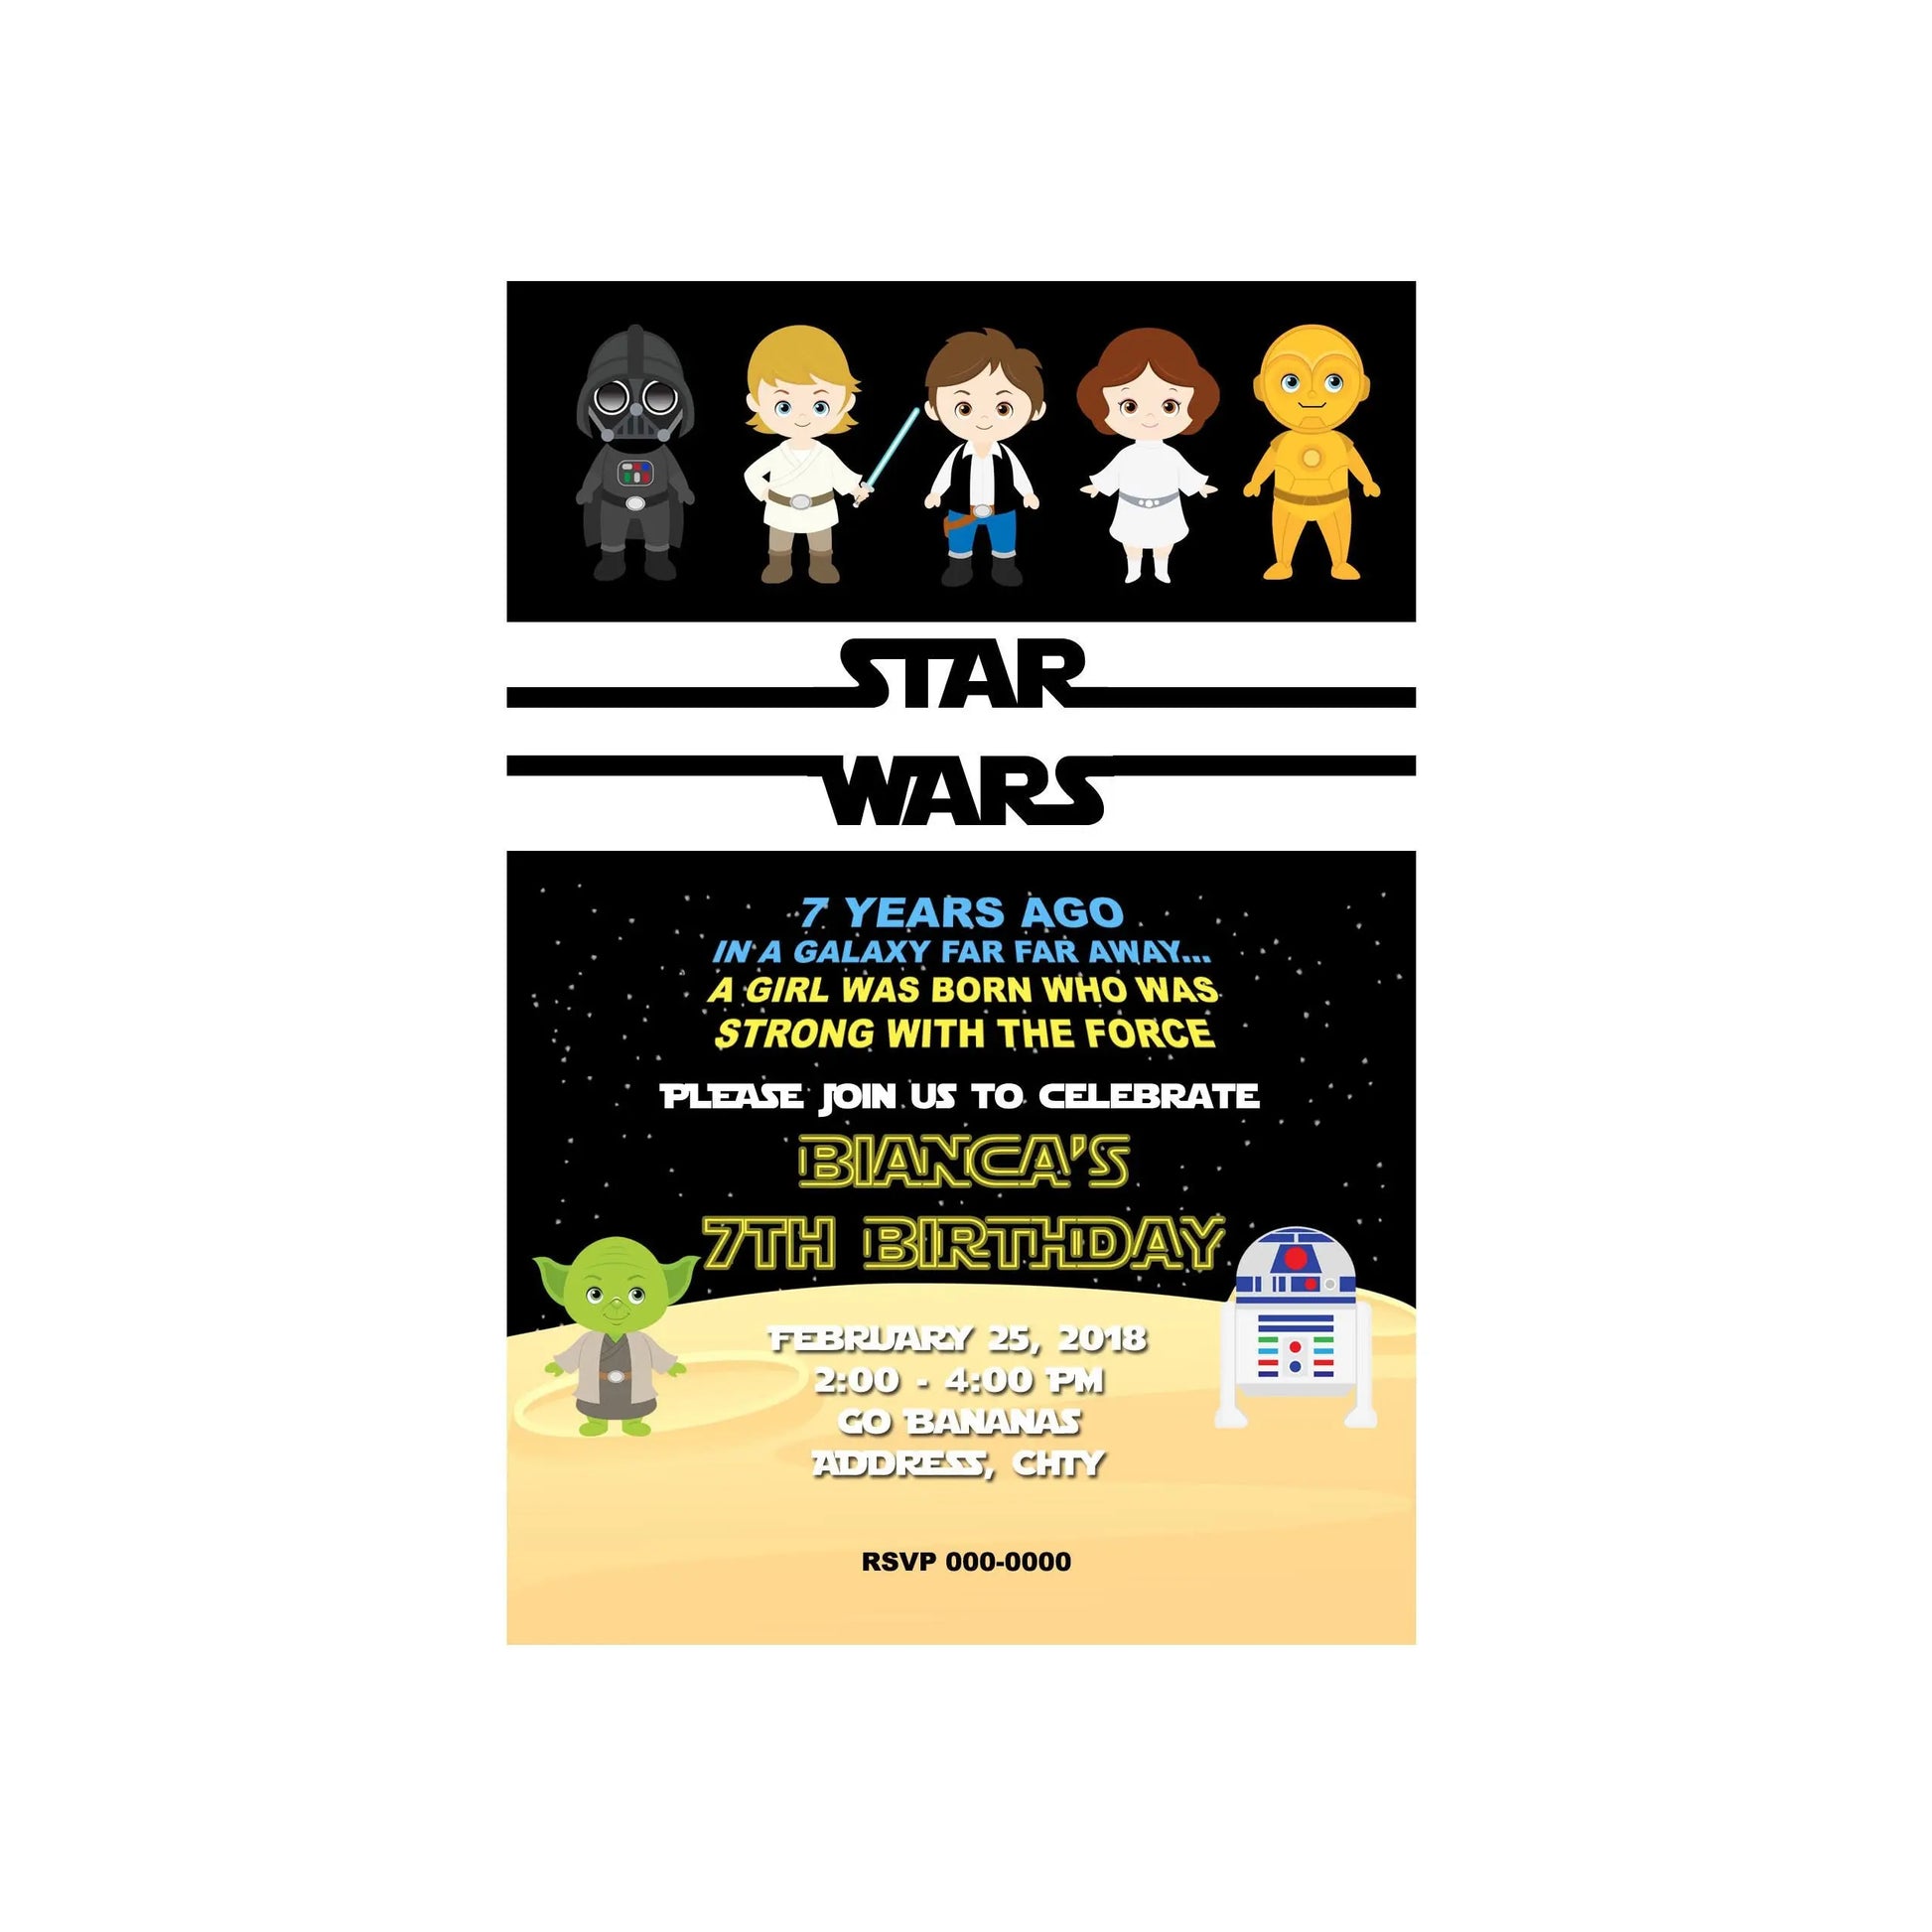 PRINTABLE Star Wars Kids Cards - DIY Favour Digital - Personalized Handmade Favor Tags - Instant Download